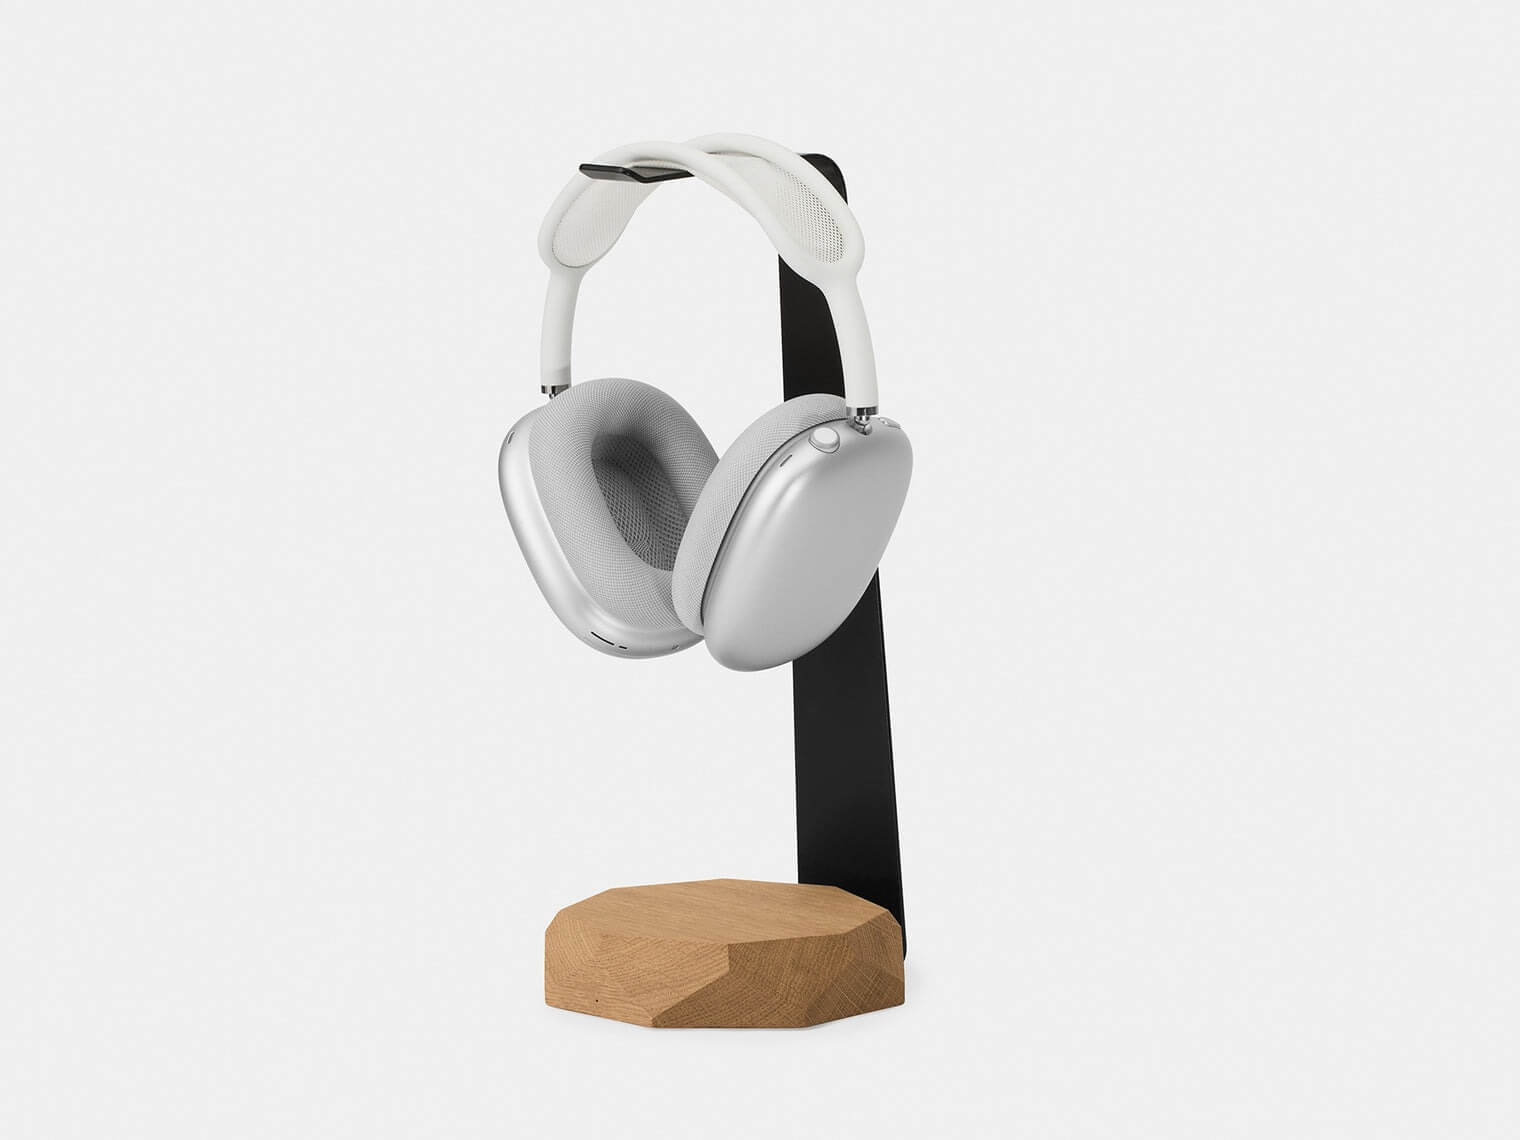 Oakywood headphone stand